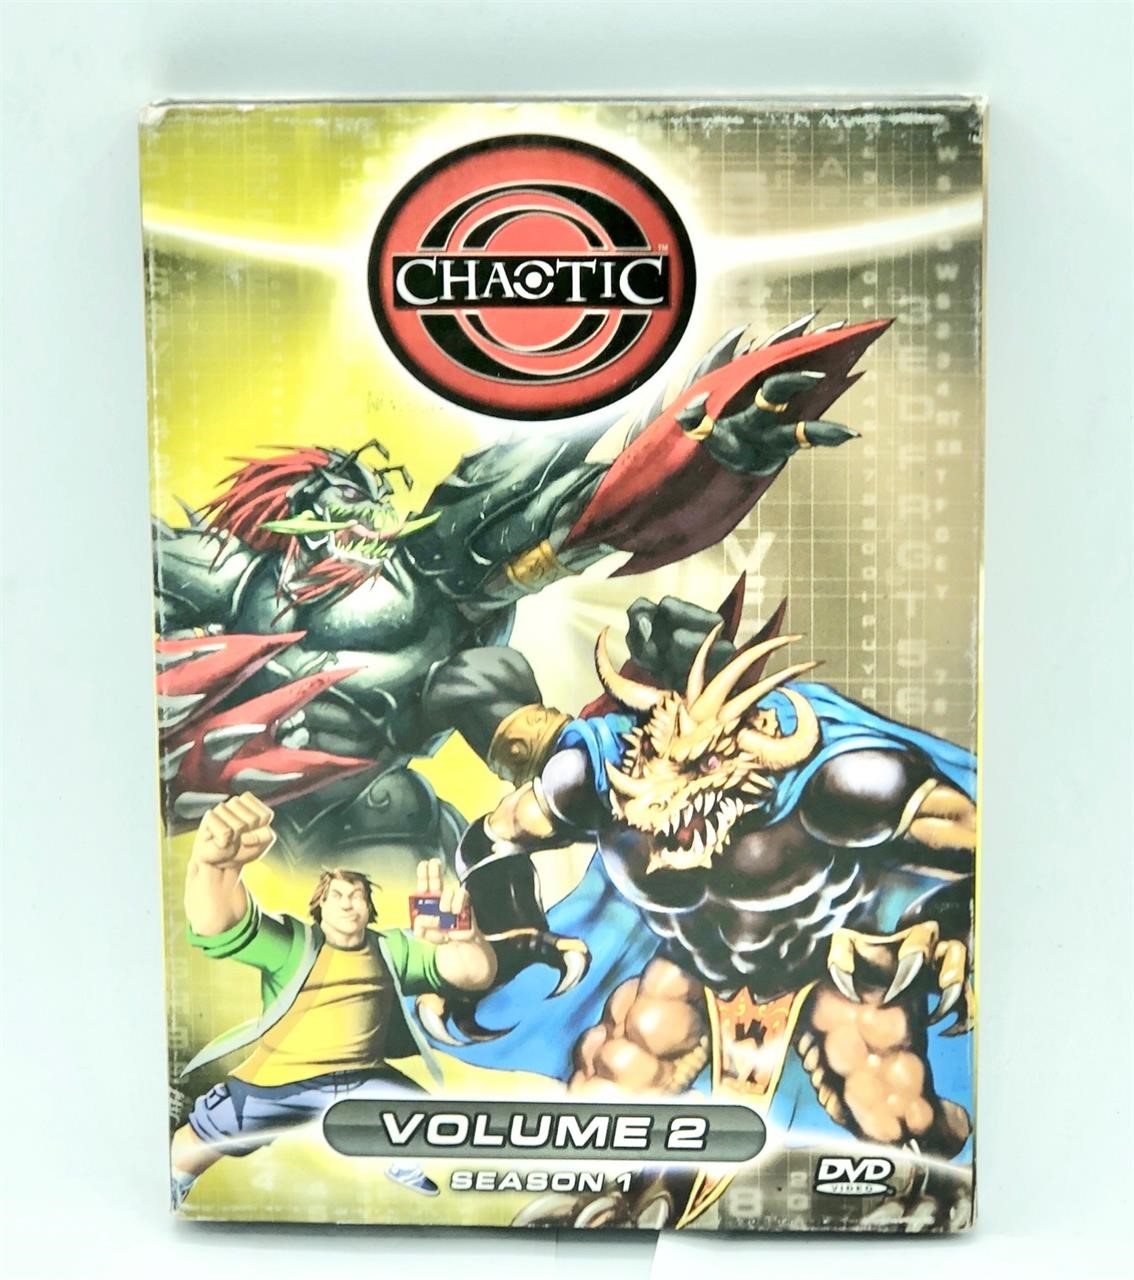 Chaotic  Volume 2 Season 1 DVD previously viewed